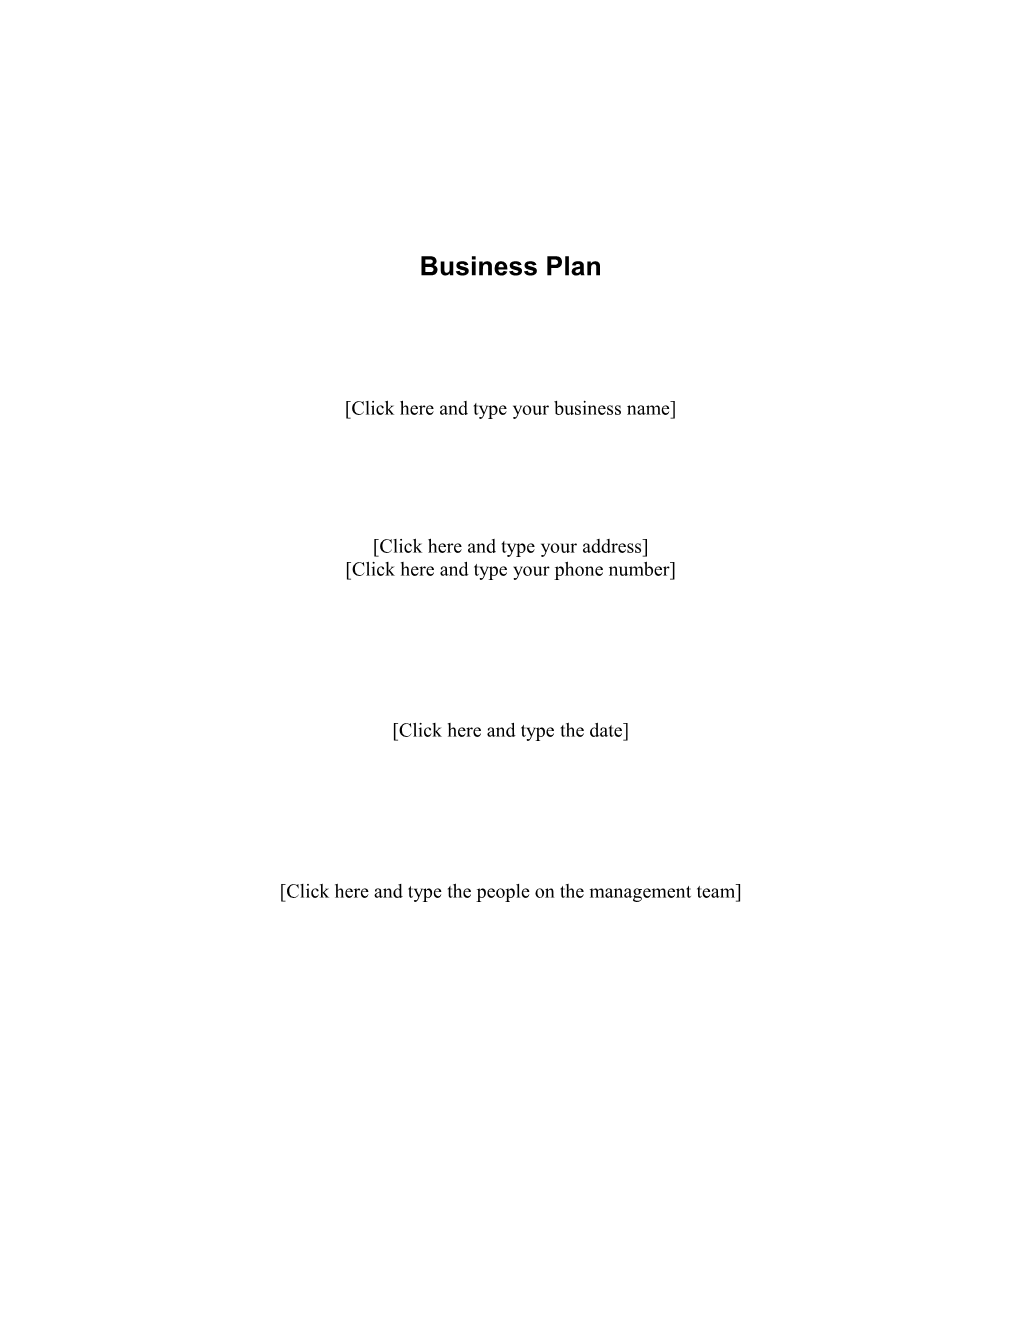 Business Plan Template s4